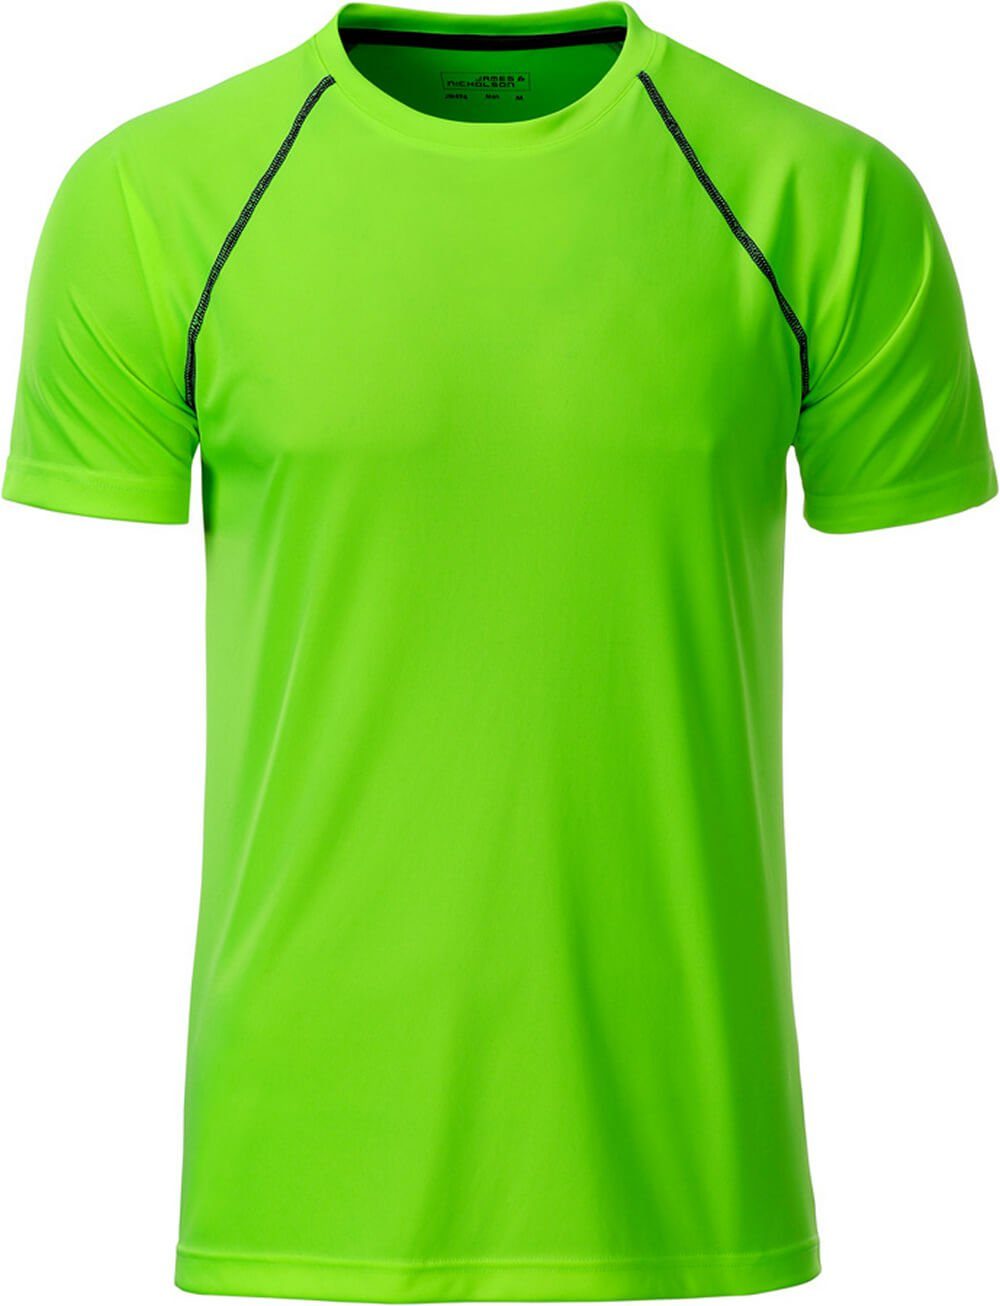 green/black Nicholson James Funktions-Shirt James Nicholson 496 & JN trocknend Herren & Funktionsshirt schnell bright